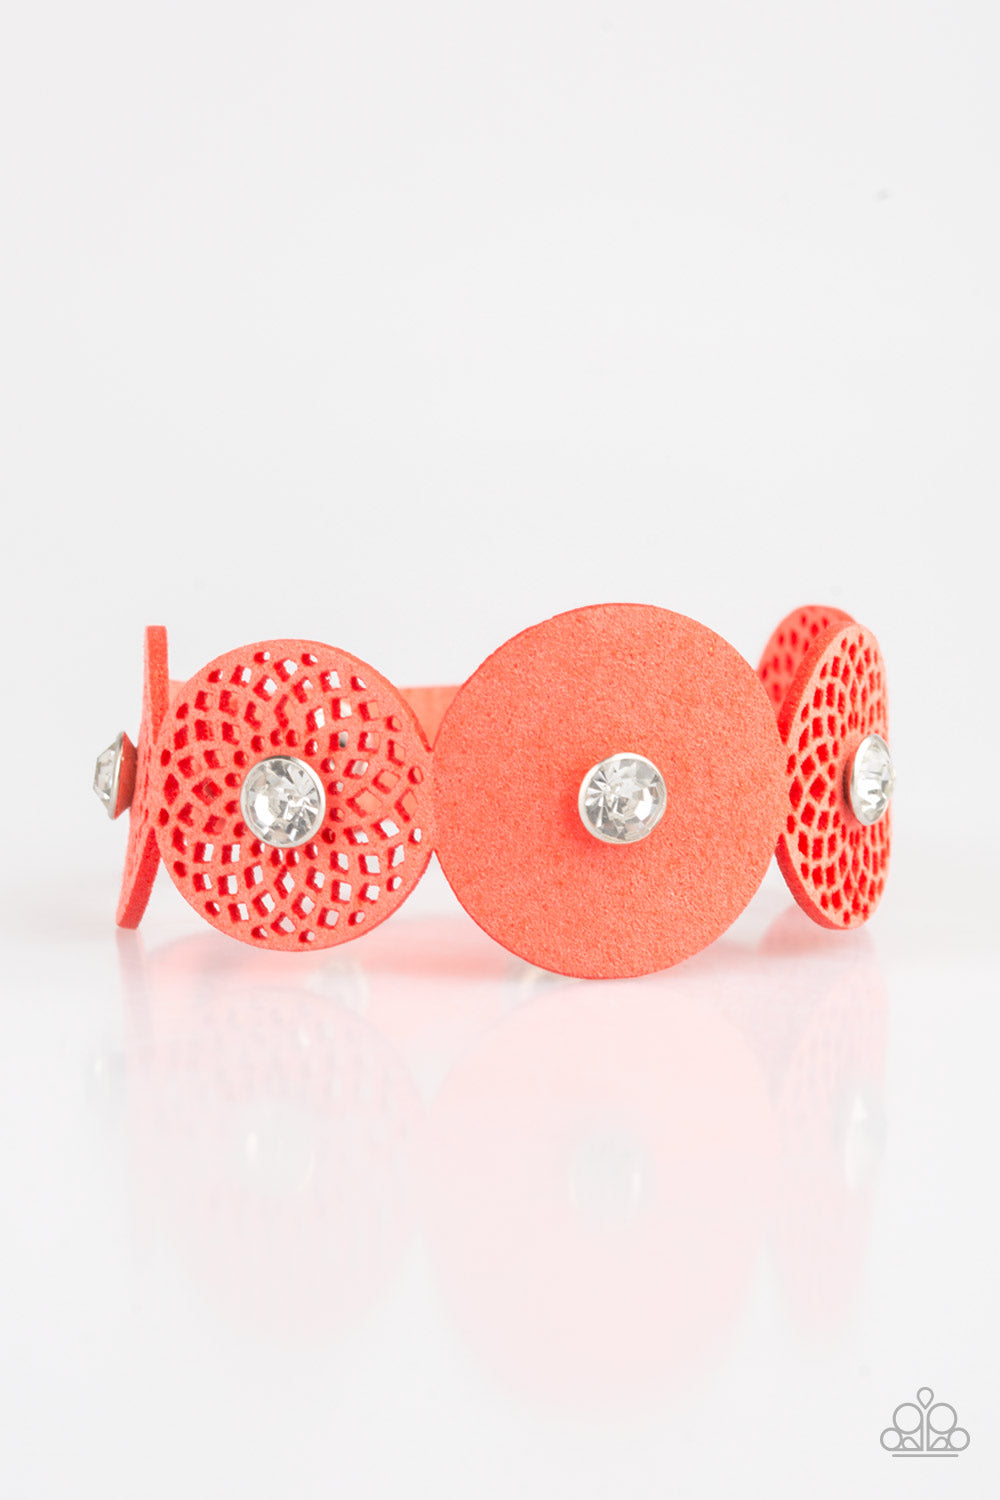 Poppin Popstar Orange Paparazzi Bracelets Cashmere Pink Jewels - Cashmere Pink Jewels & Accessories, Cashmere Pink Jewels & Accessories - Paparazzi